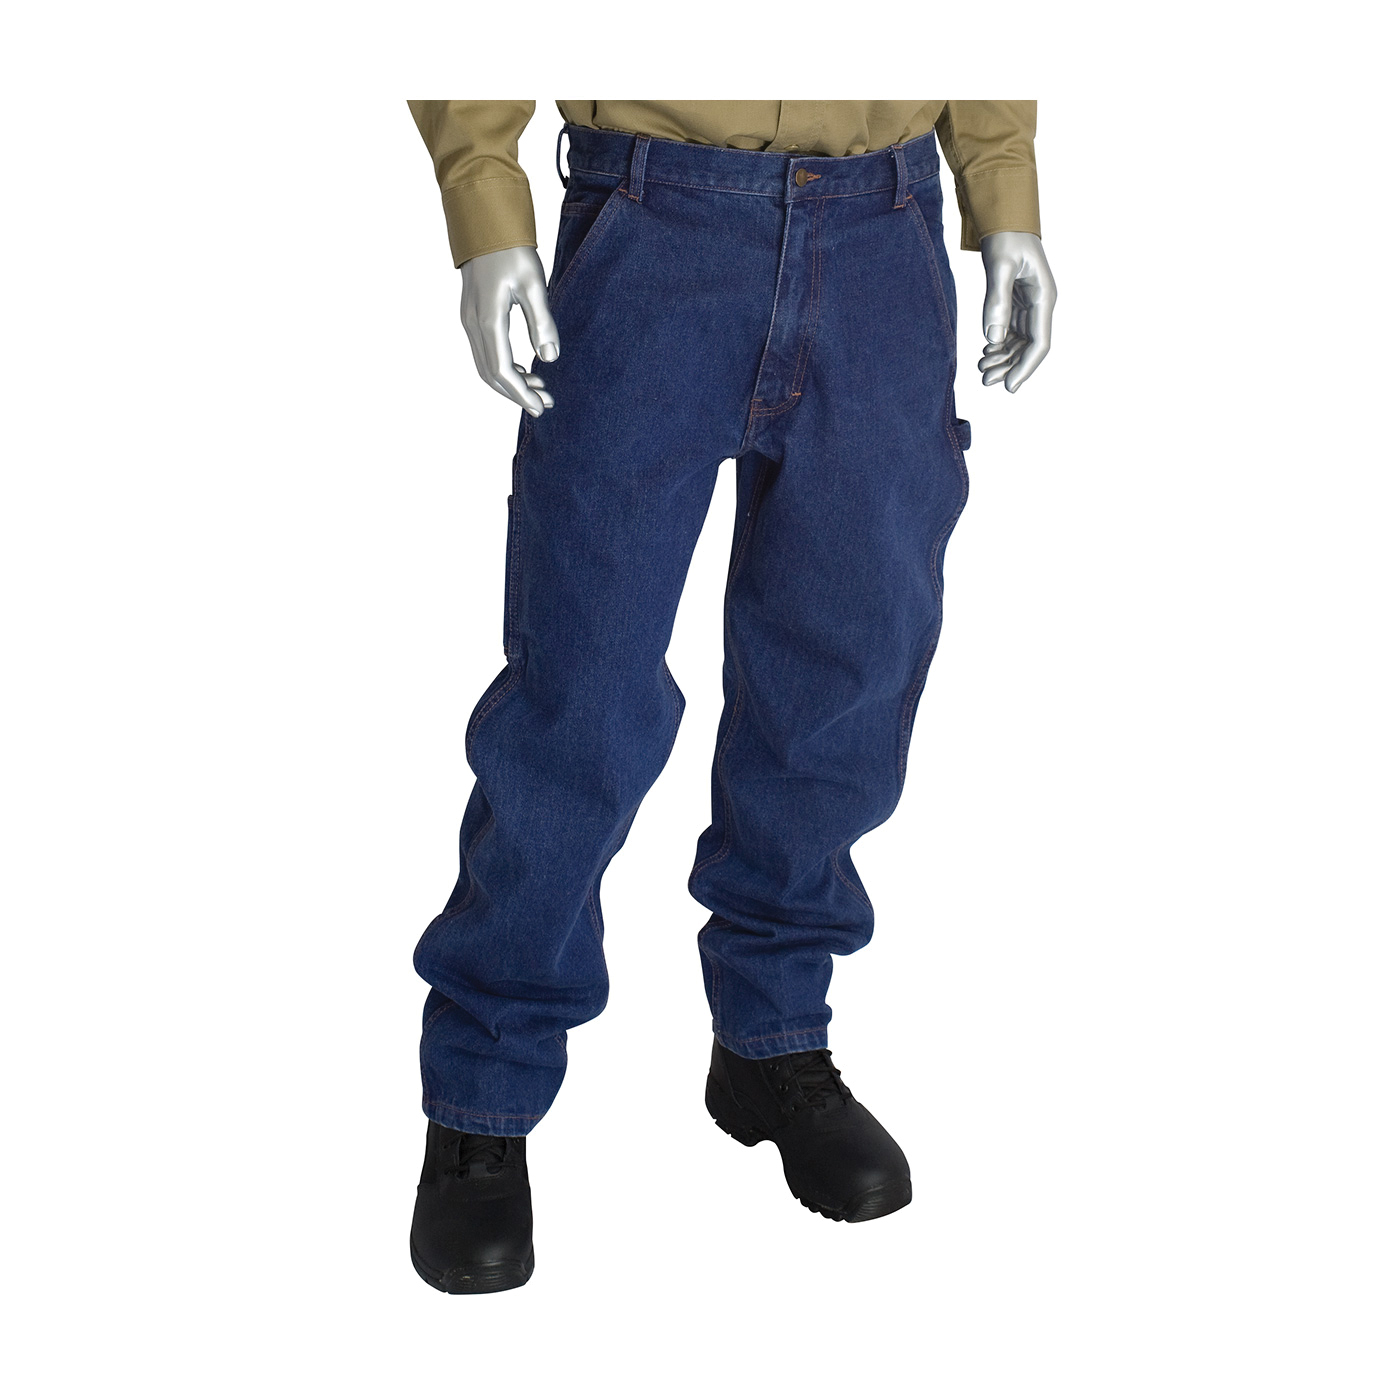 PIP® 385-FRCJ-4236 Carpenter Jeans, 42 in Waist, 36 in L Inseam, Blue Denim, Cotton